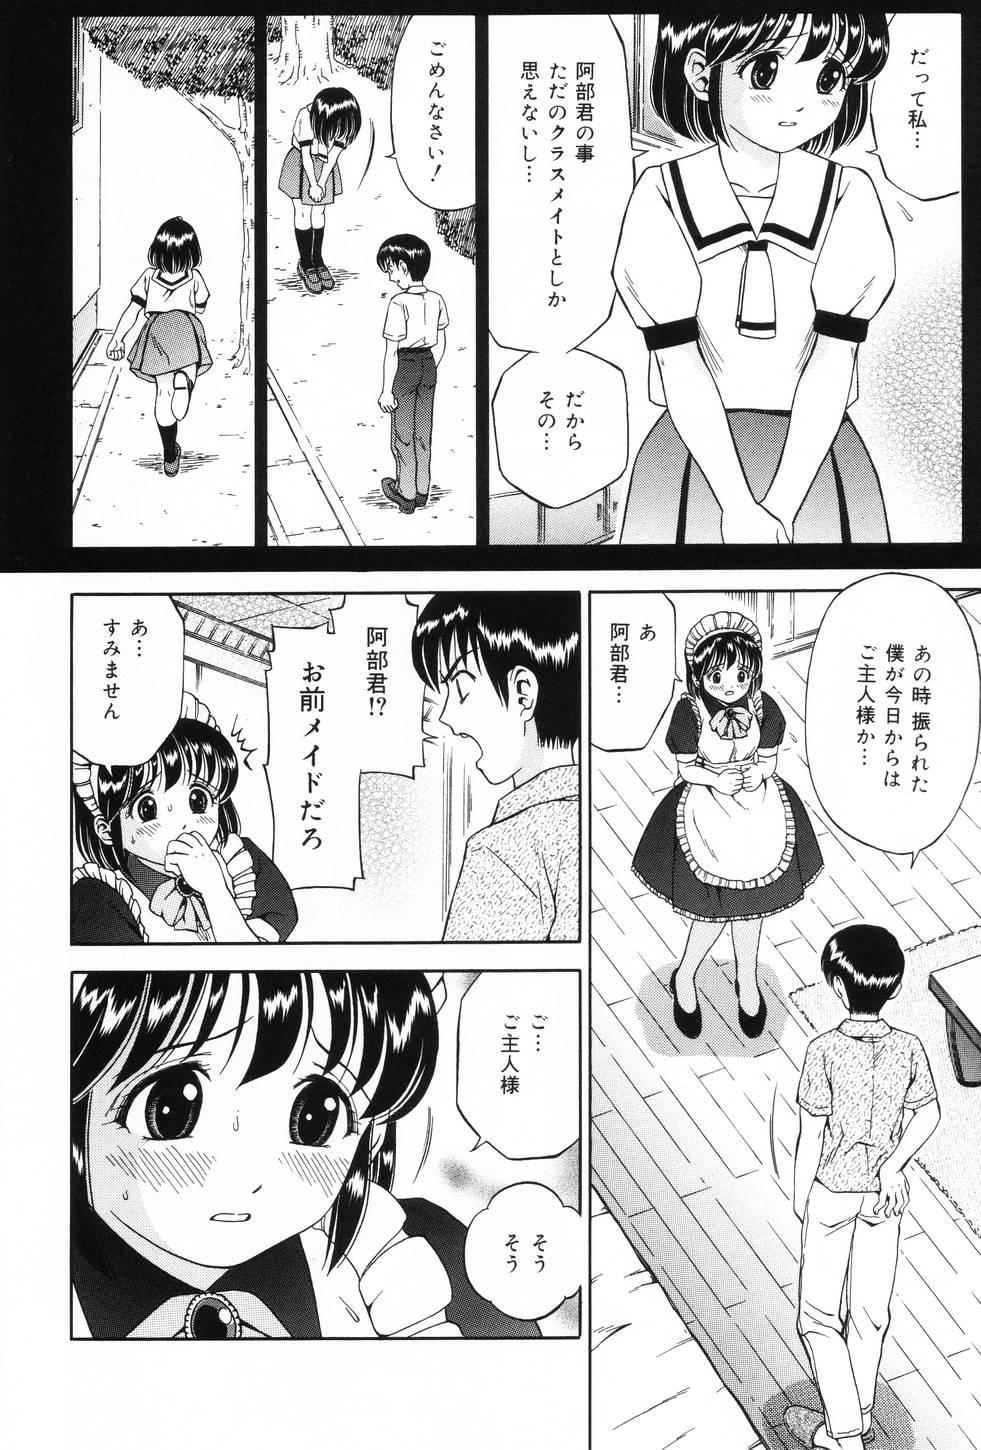 Watashi wa Maid - I am a maid 7